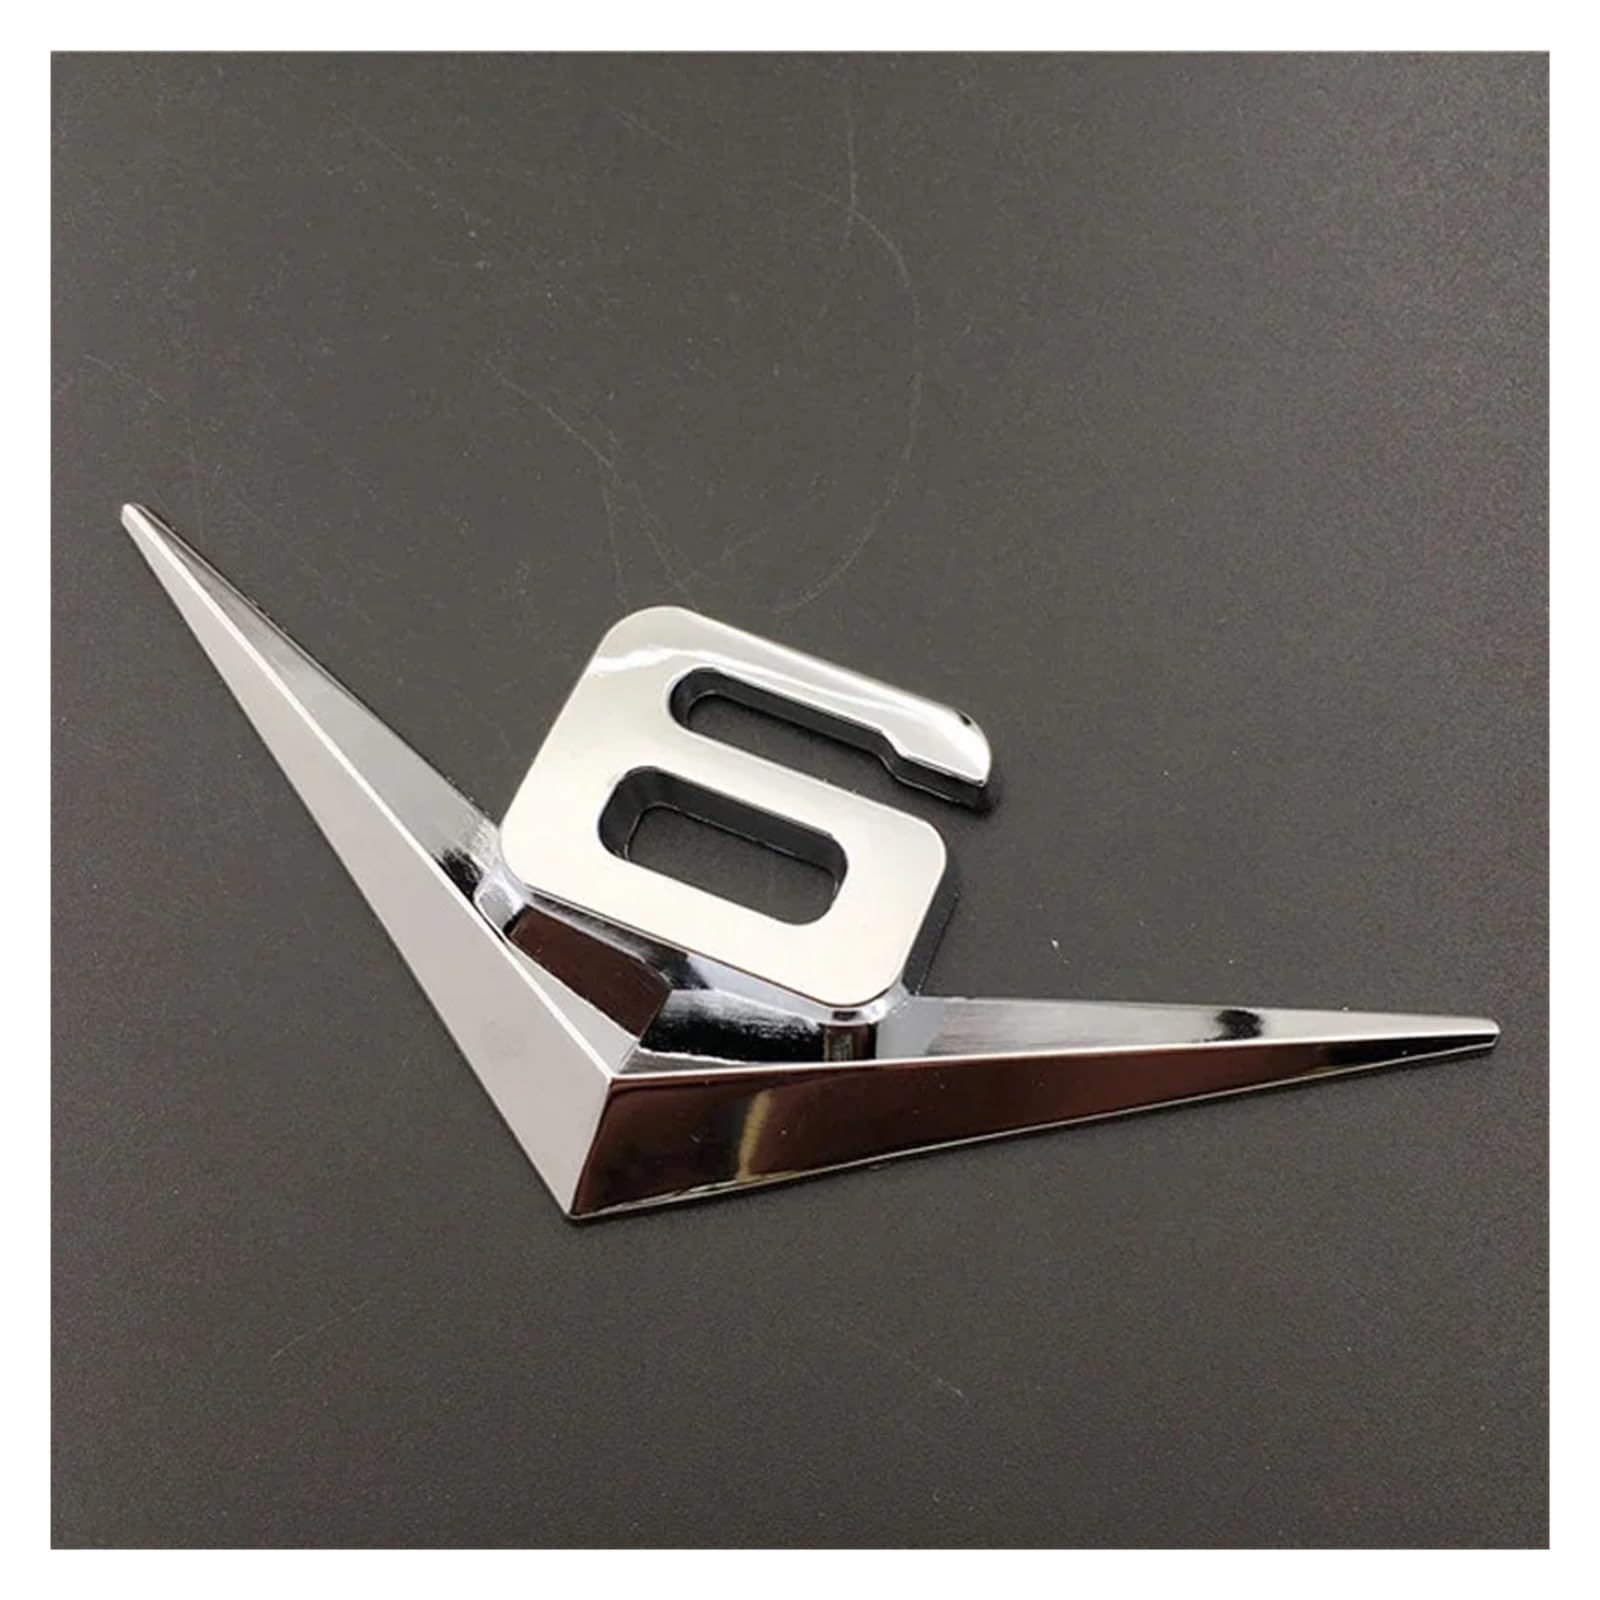 AQXYWQOL 3D Metall Chrom Schwarz V6 V8 Buchstaben Hinten Kofferraum Kotflügel Abzeichen Emblem Aufkleber Aufkleber Farbe ist konstant, verblasst nicht und beschädigt(V6 Silver) von AQXYWQOL